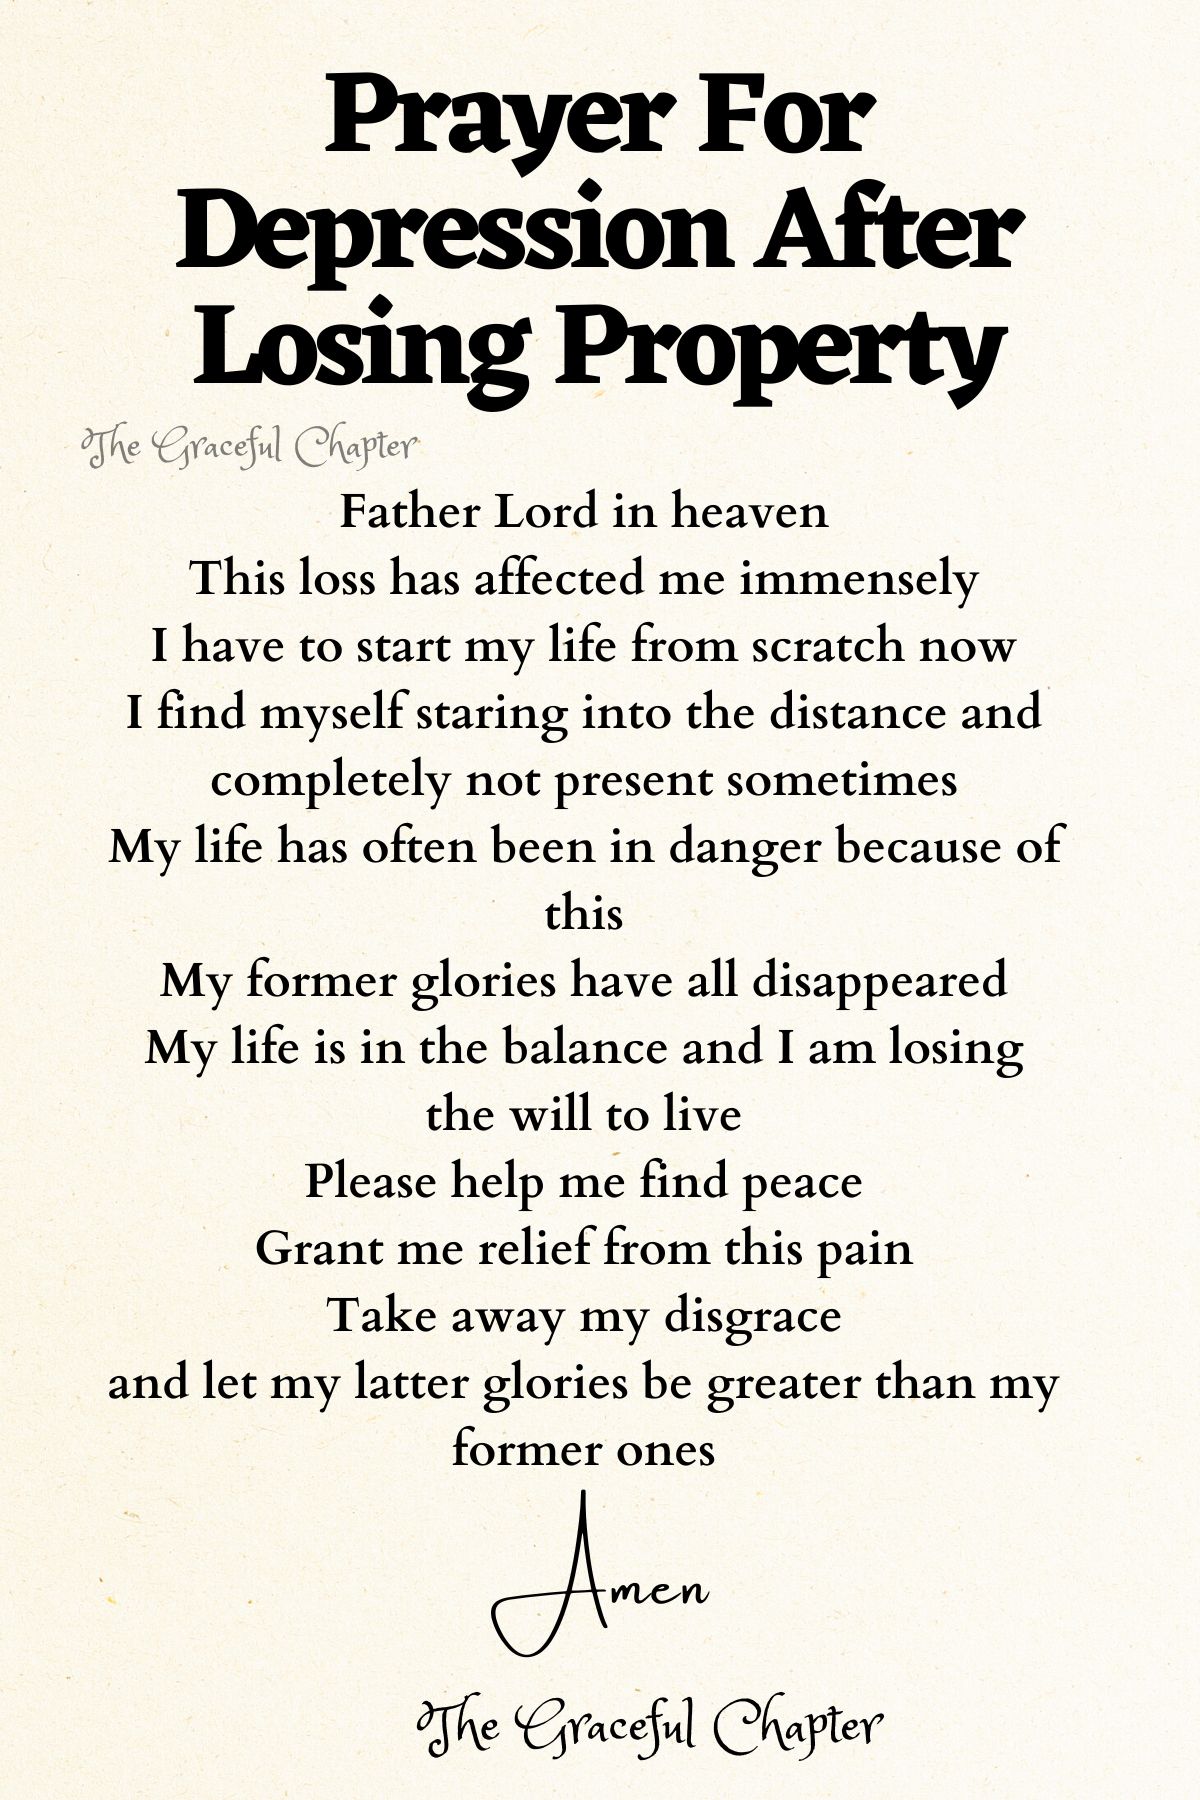 Prayer for depression after losing property